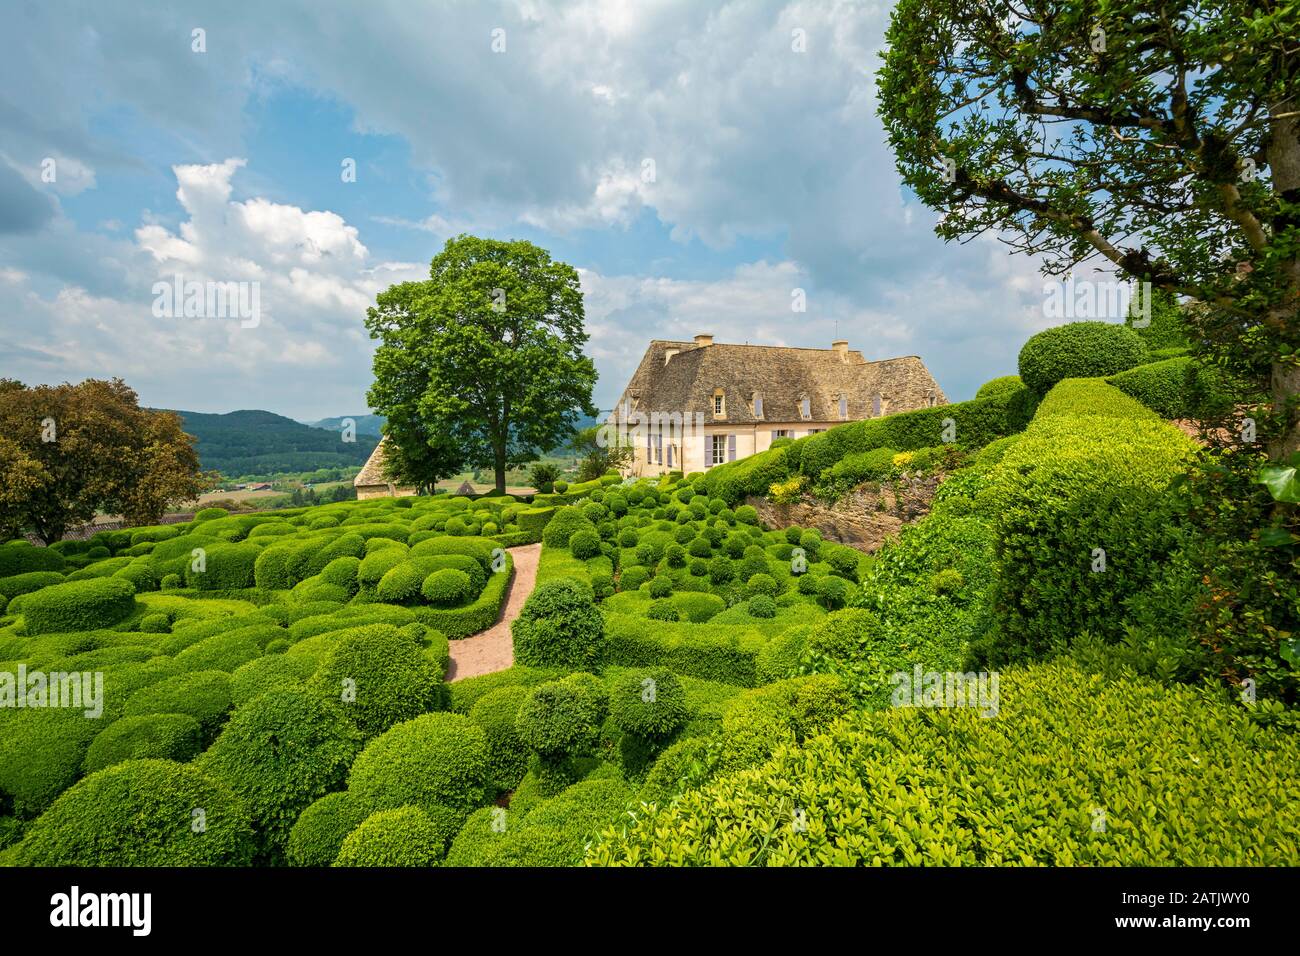 France, Dordogne, Vezac, Jardins de Marqueyssac, Chateau 19C, gardens Stock Photo